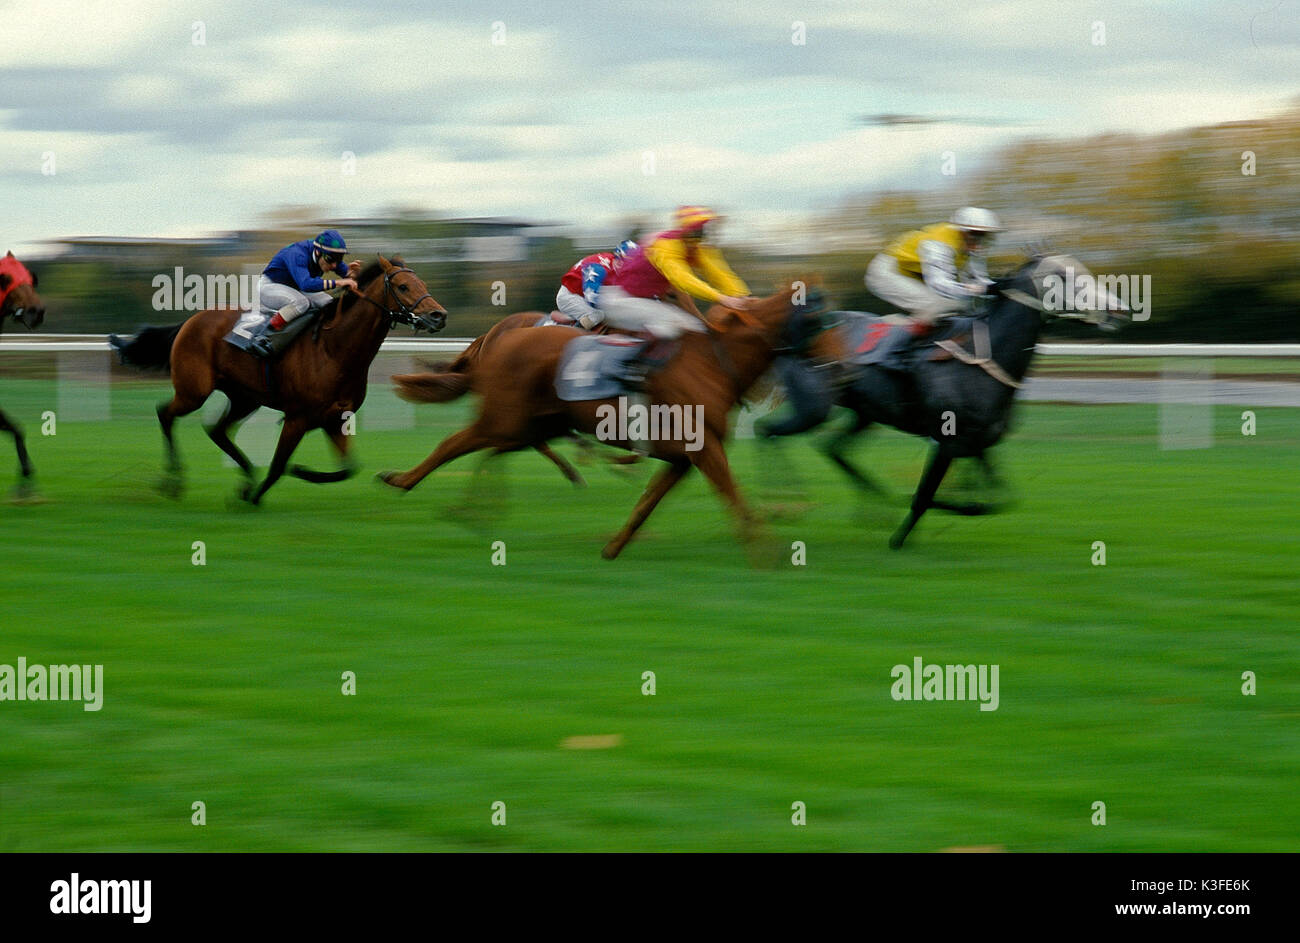 horseraces, Jockey on racing horse Stock Photo